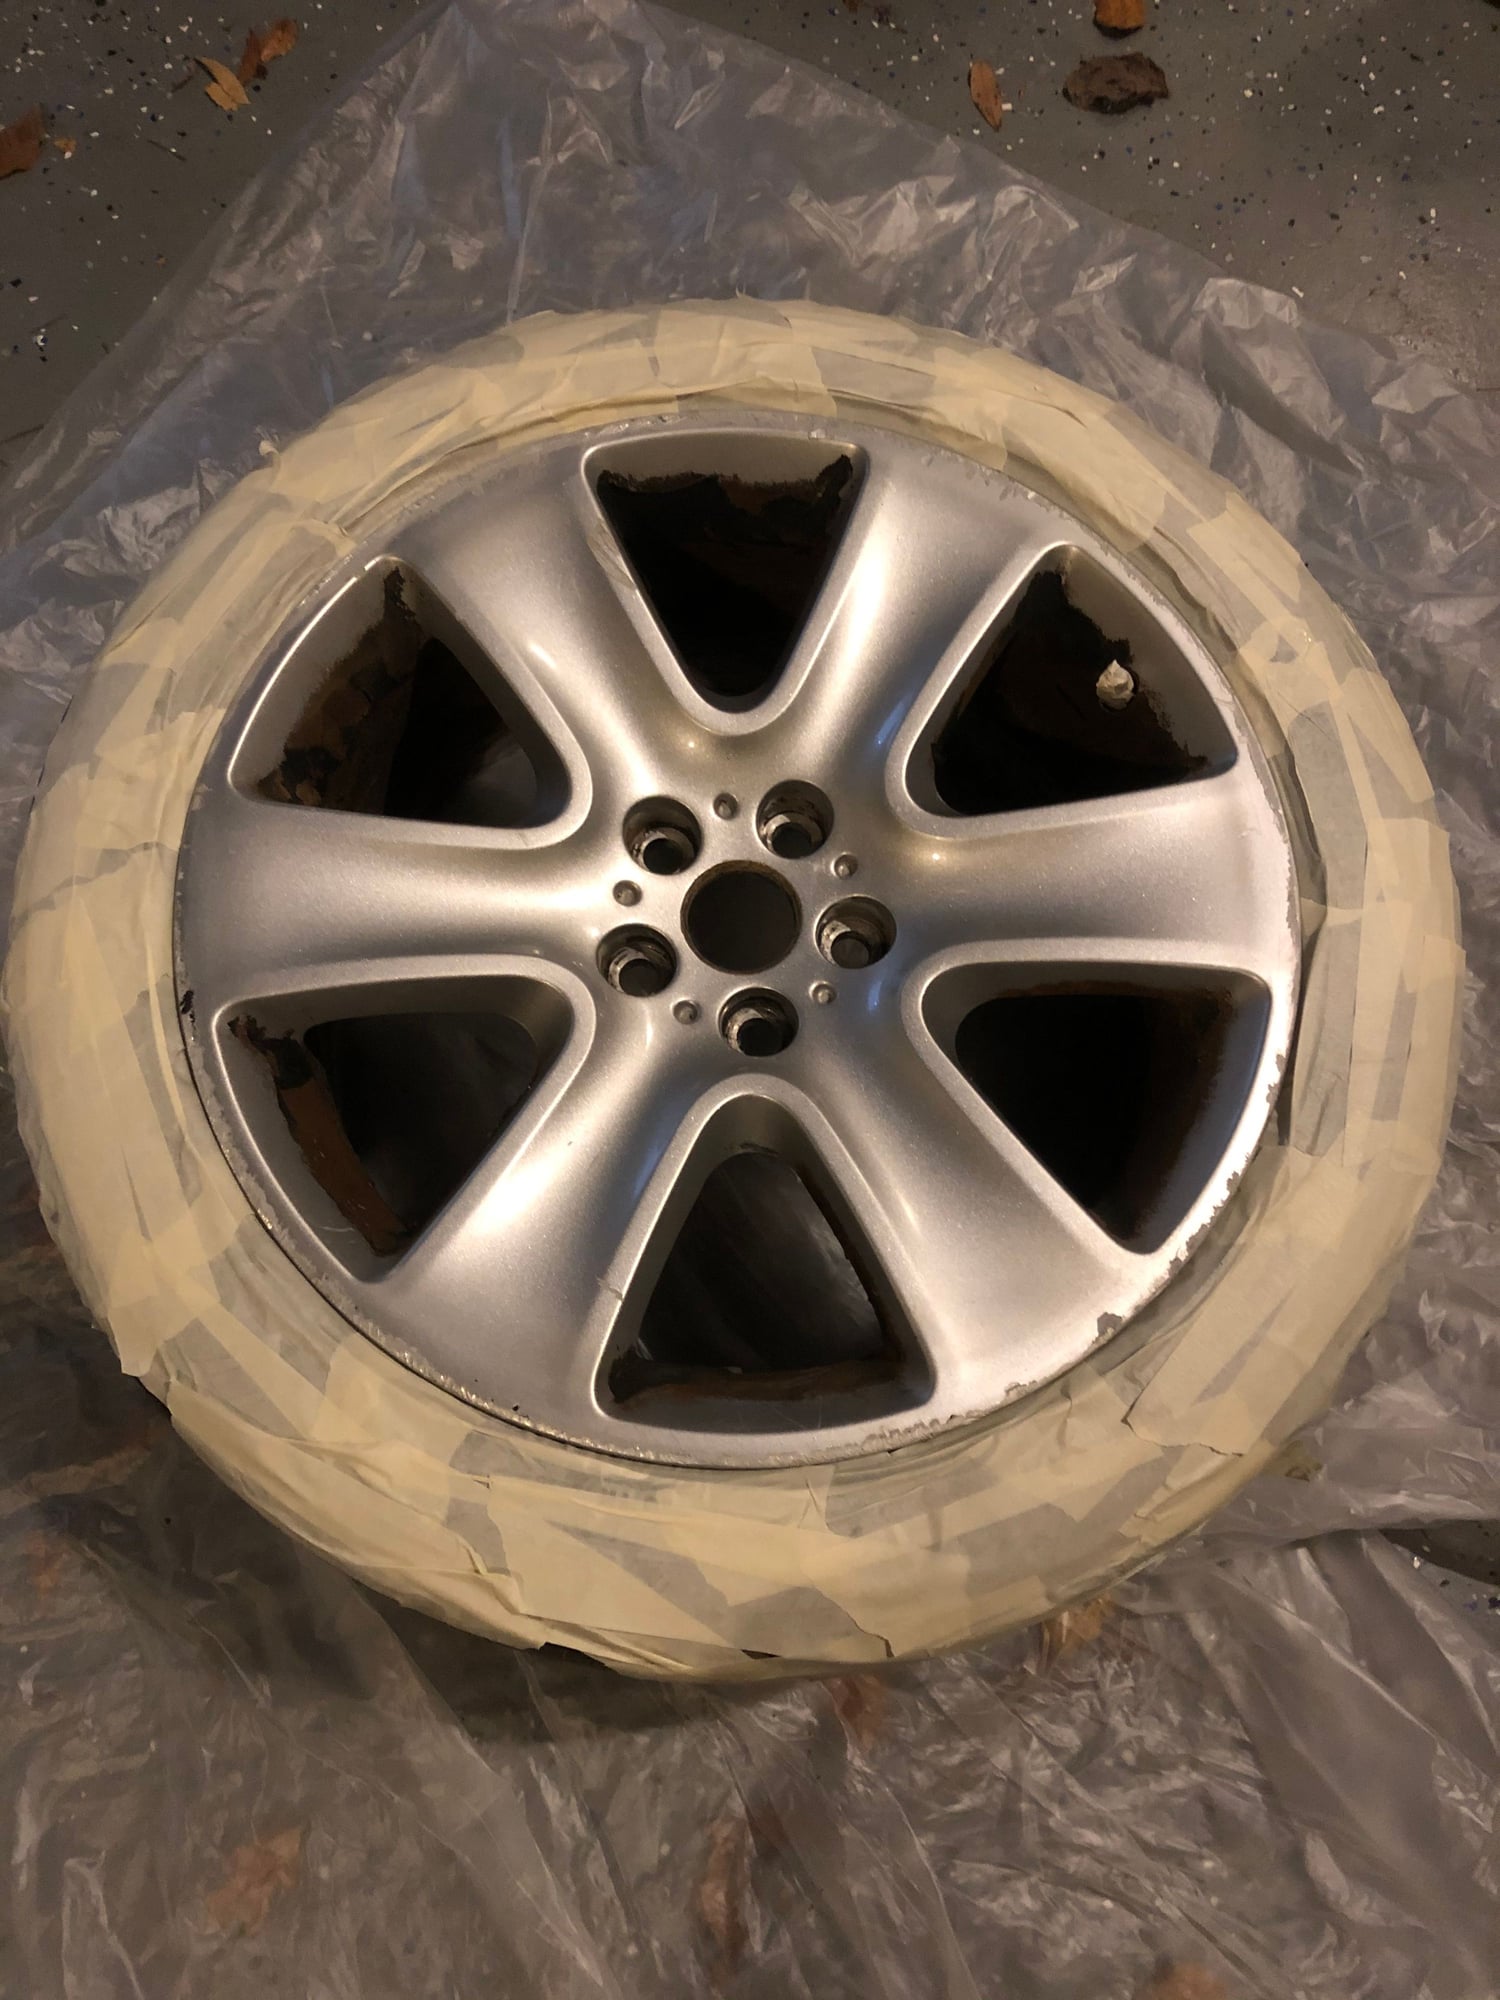 Wheels and Tires/Axles - 18 inch XF wheels - Used - 2012 to 2016 Jaguar XF - Marietta, GA 30066, United States